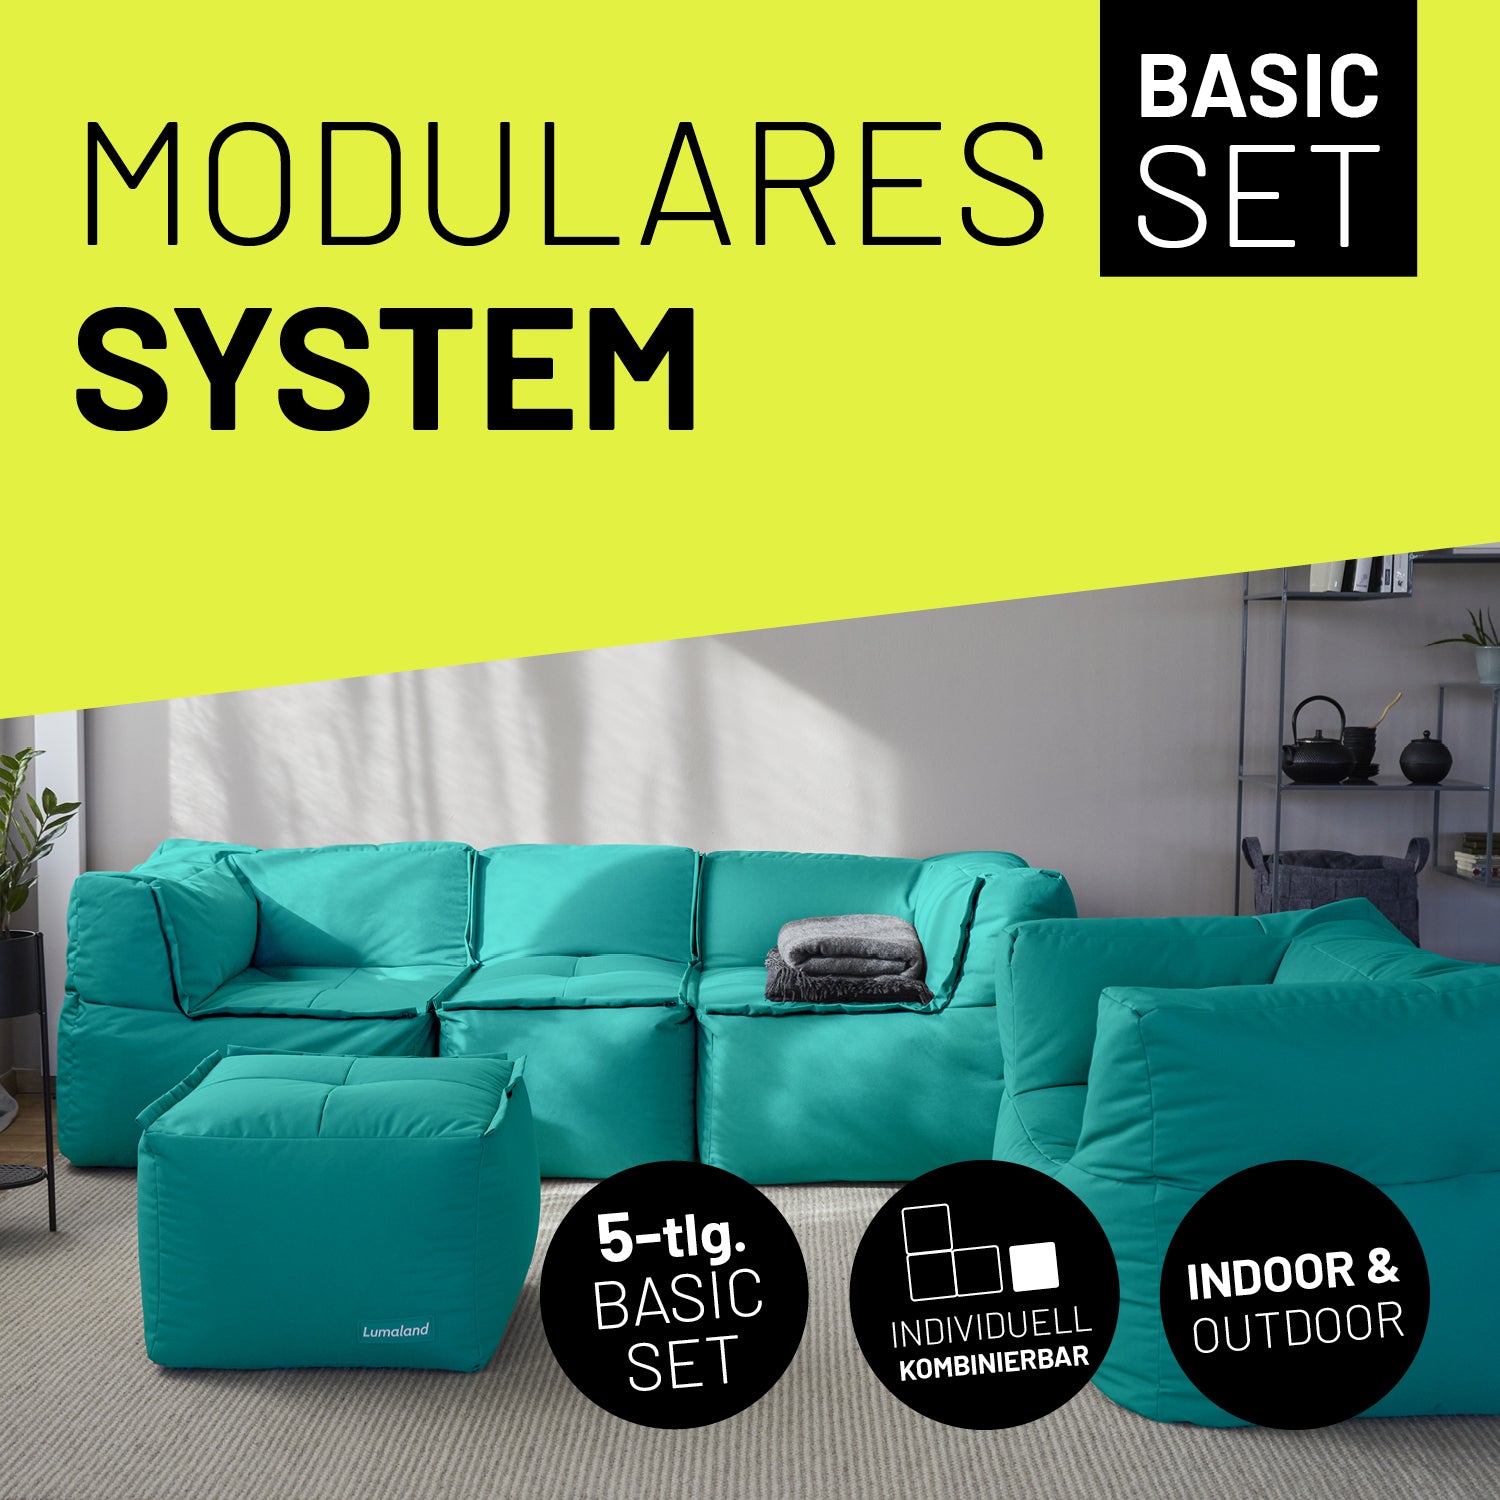 Basic Set (5-tlg.) - Modulares System - In- & outdoor - Türkis